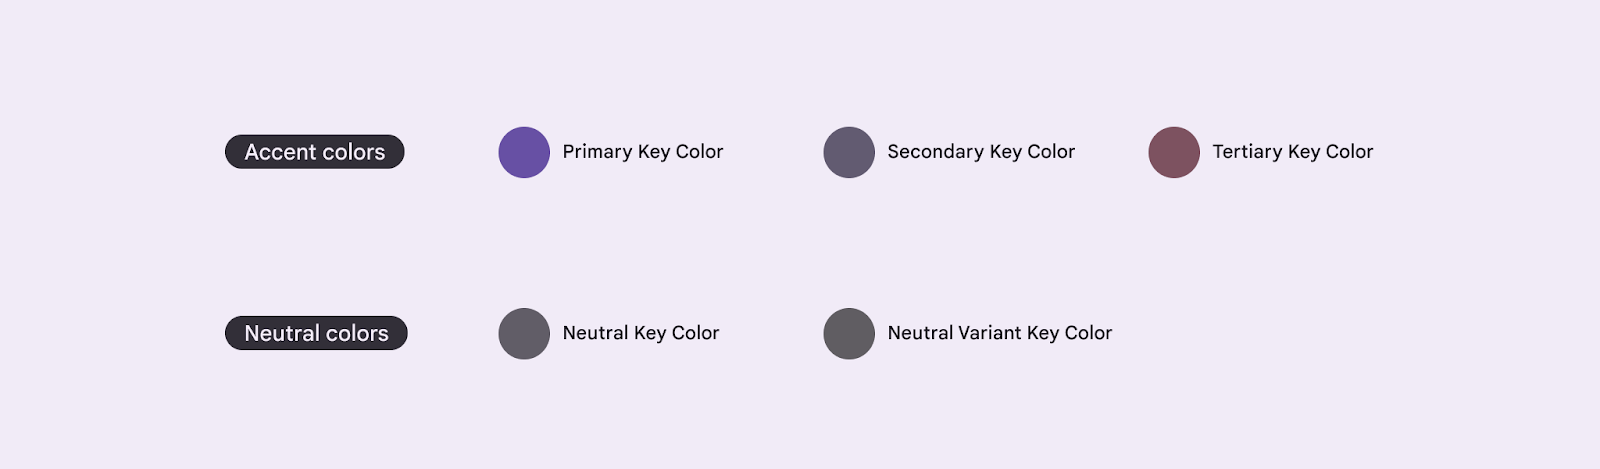 M3 테마를 만들기 위한 5개의 주요 기준 색상